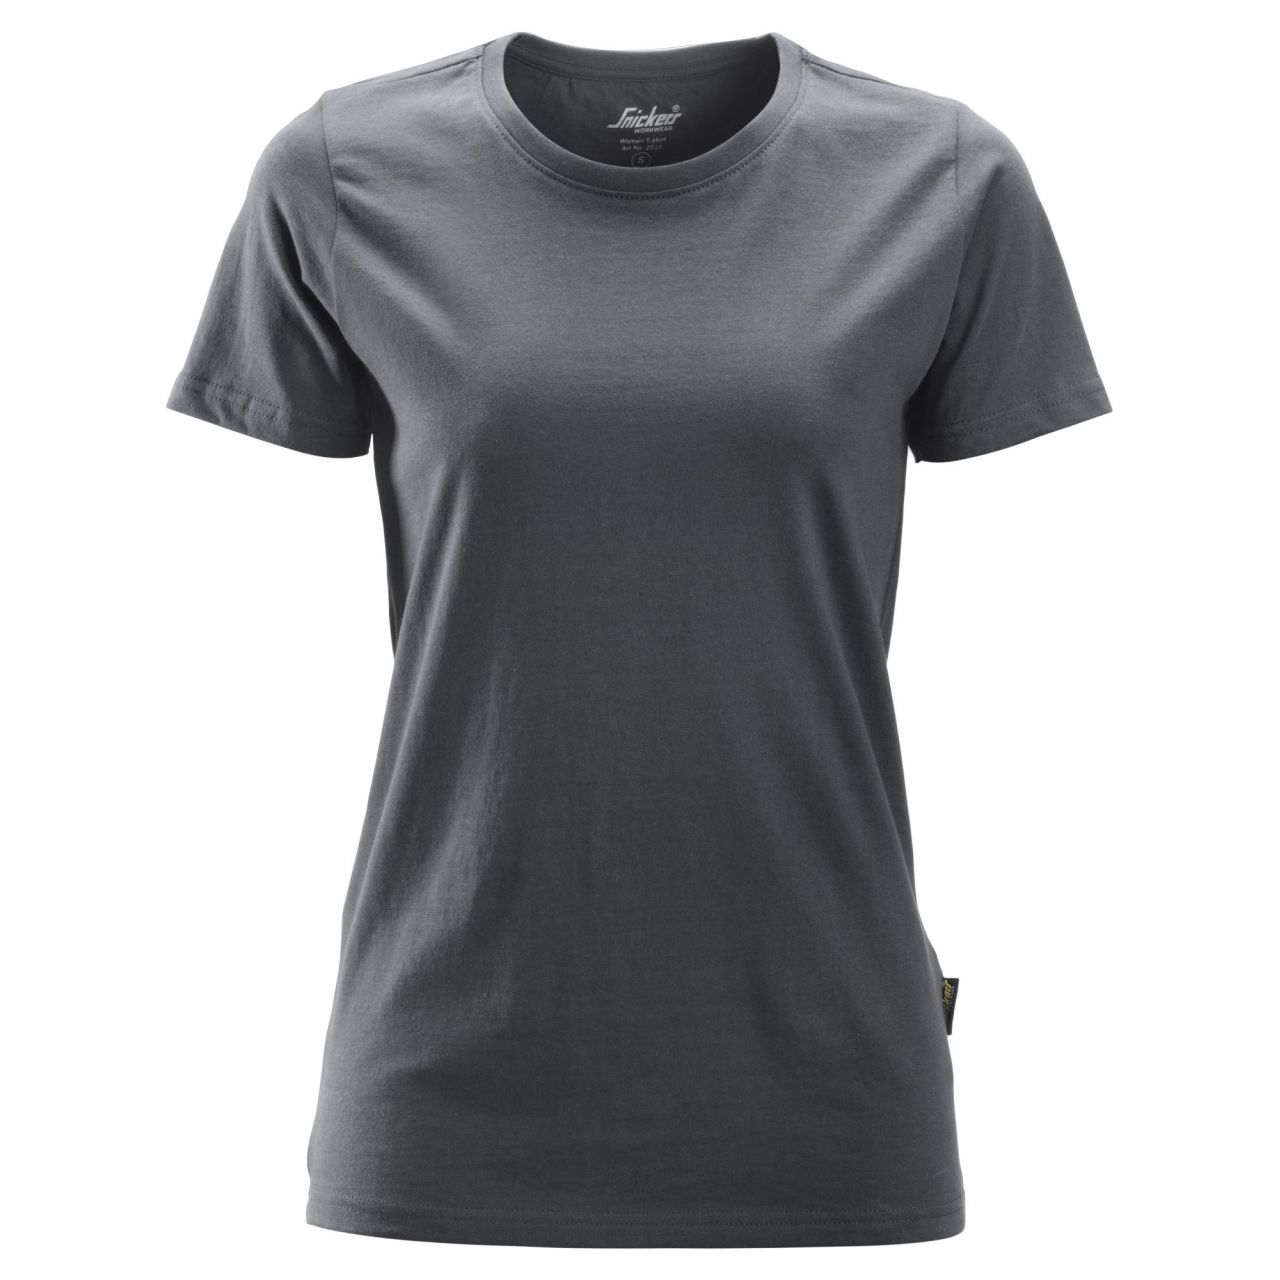 2516 Camiseta Mujer gris acero talla XS